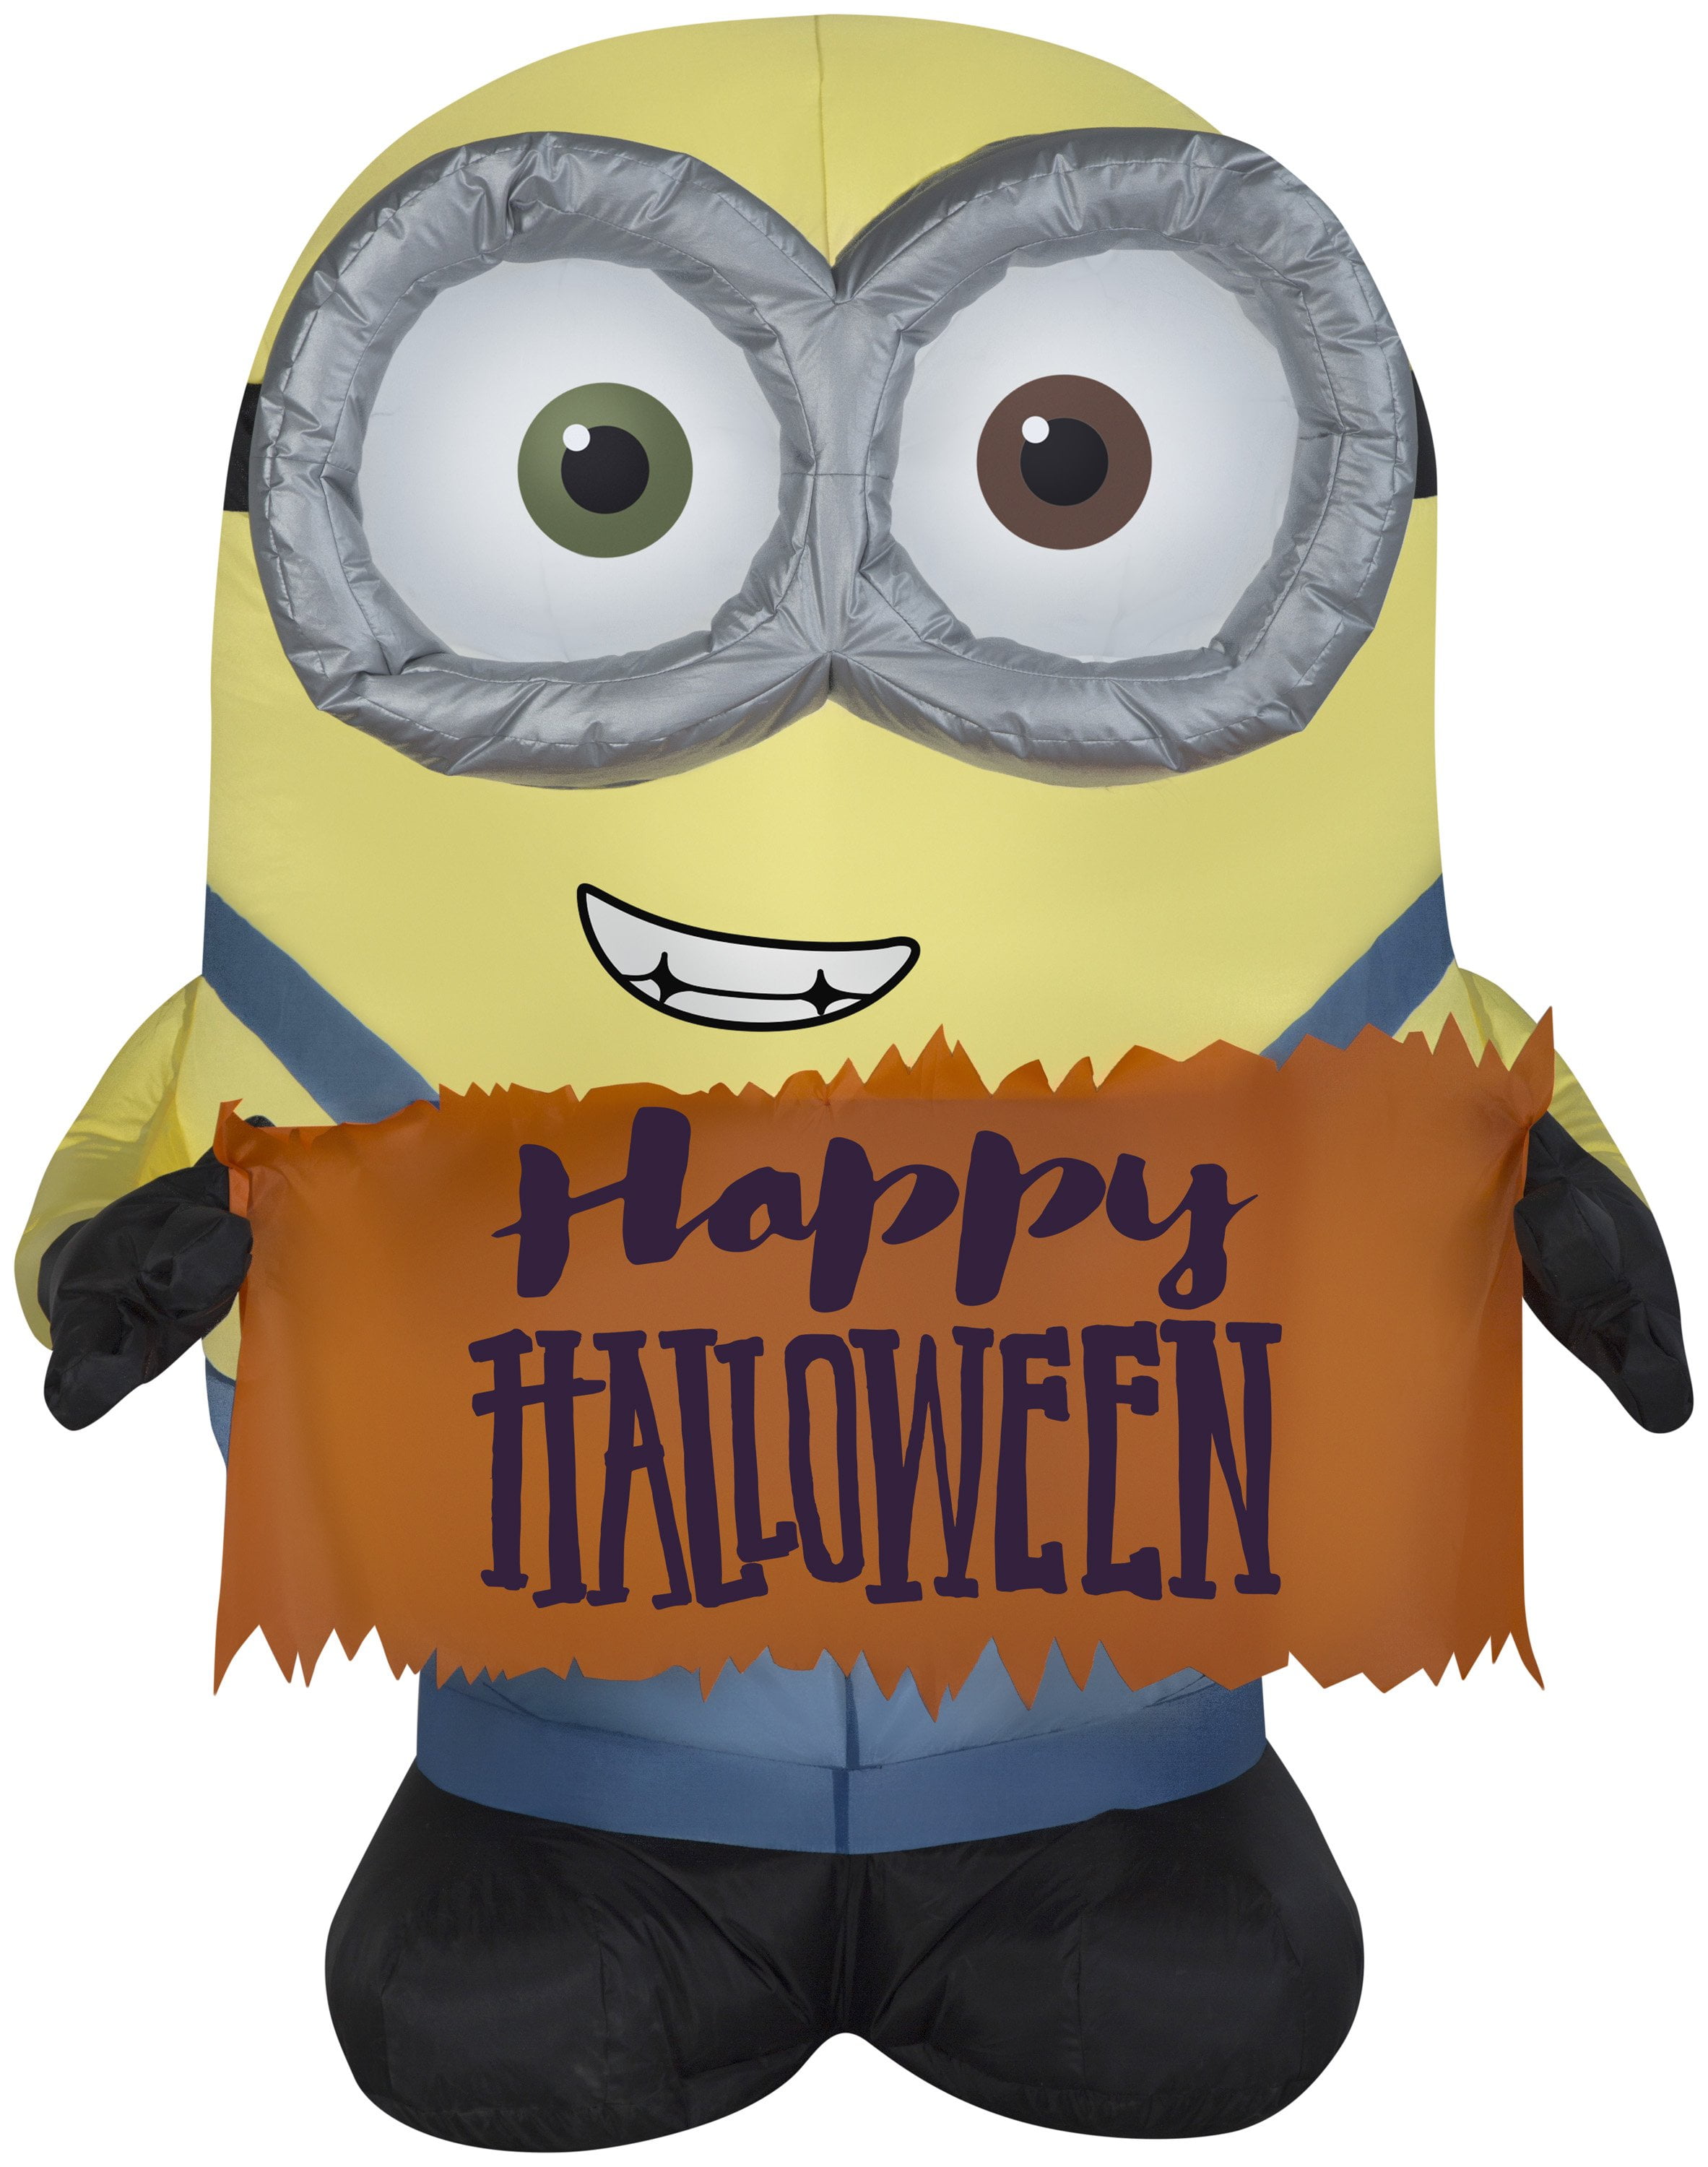 4 Minion  Bob Holding Happy Halloween  Sign Halloween  